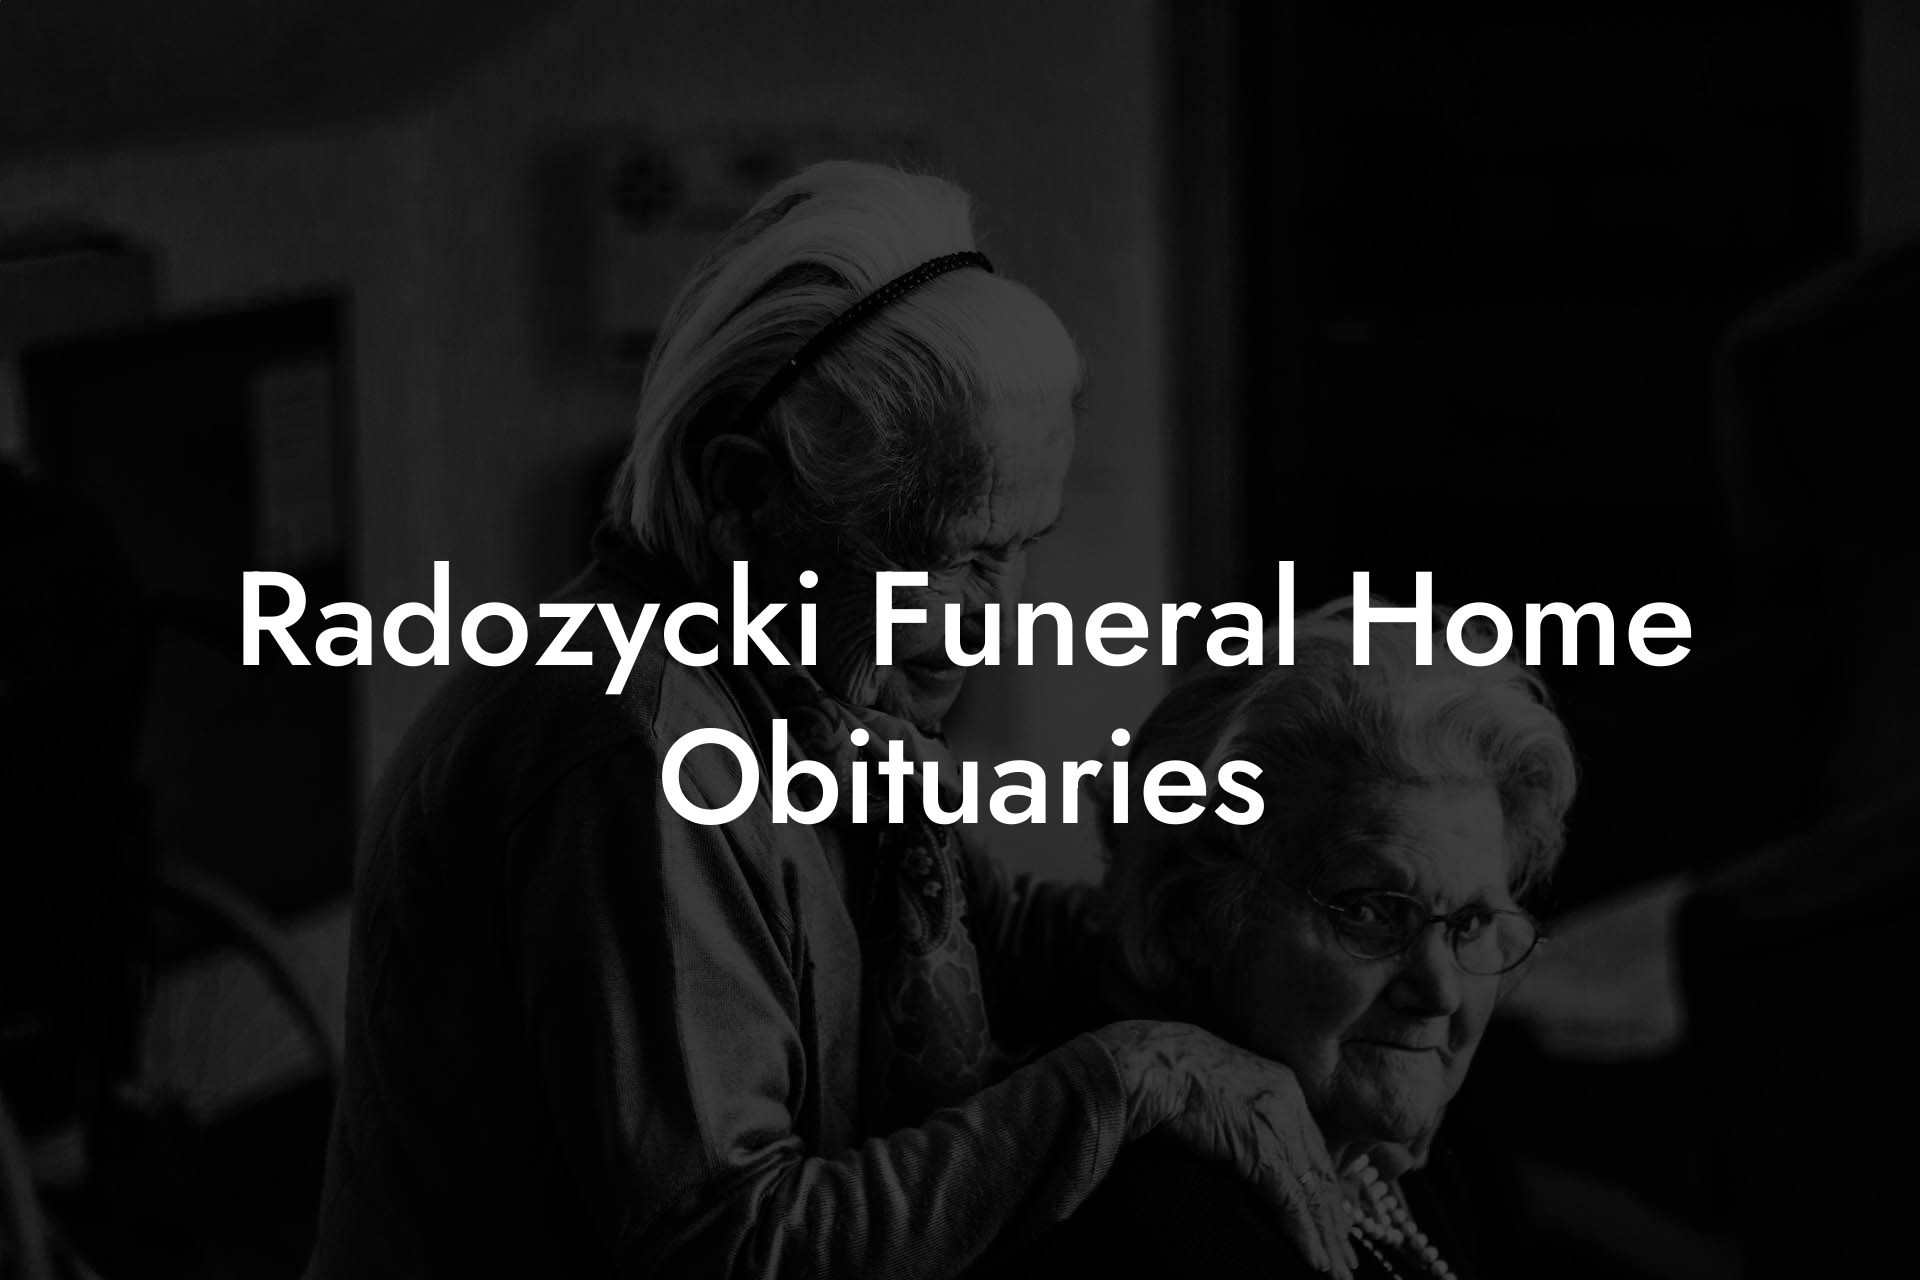 Radozycki Funeral Home Obituaries